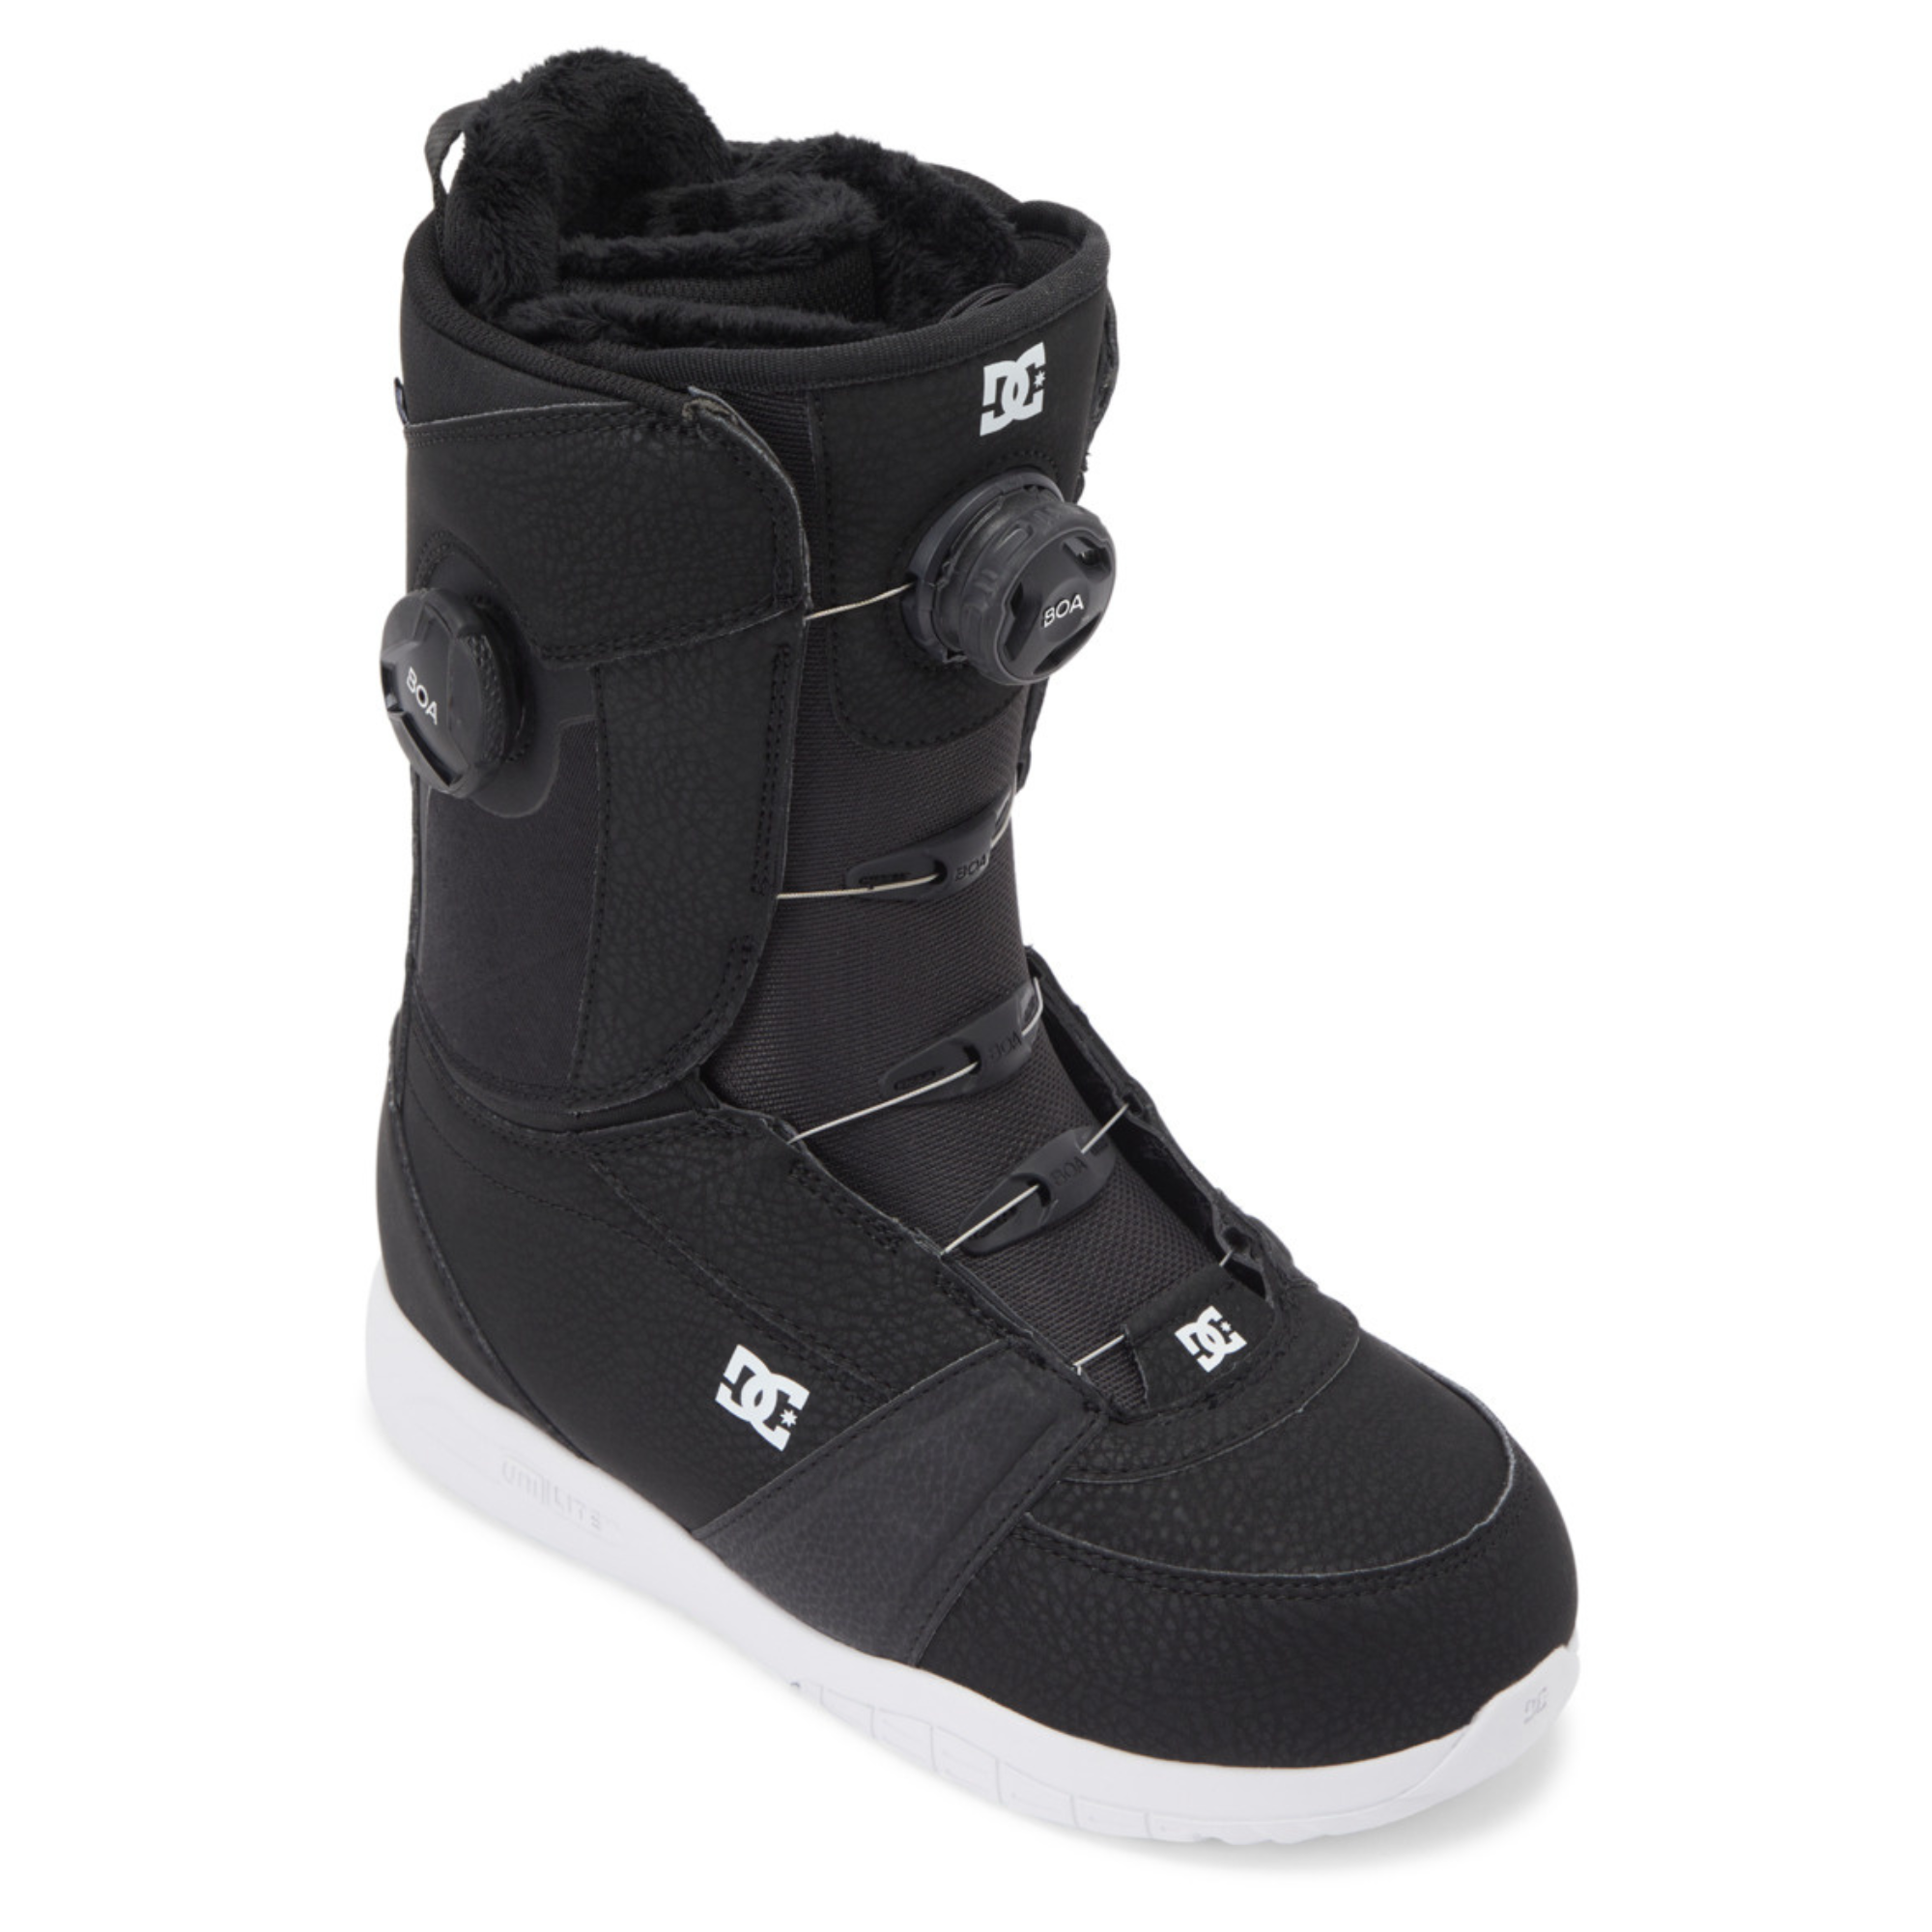 DC Women's Lotus Snowboard Boots - Black / White